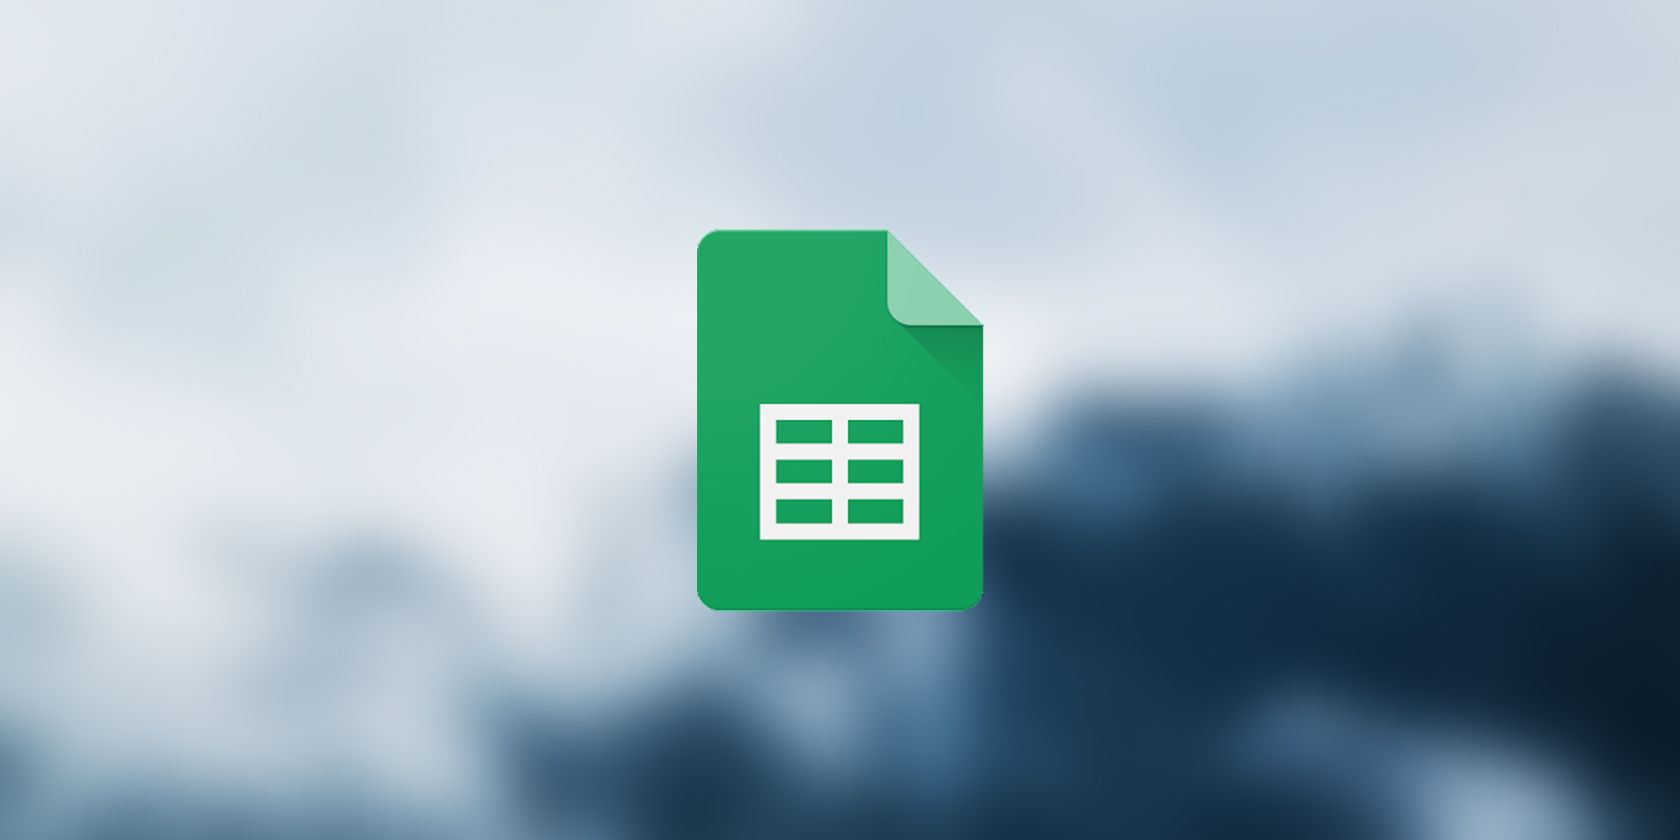 Google Sheets logo on a misty blurred background.